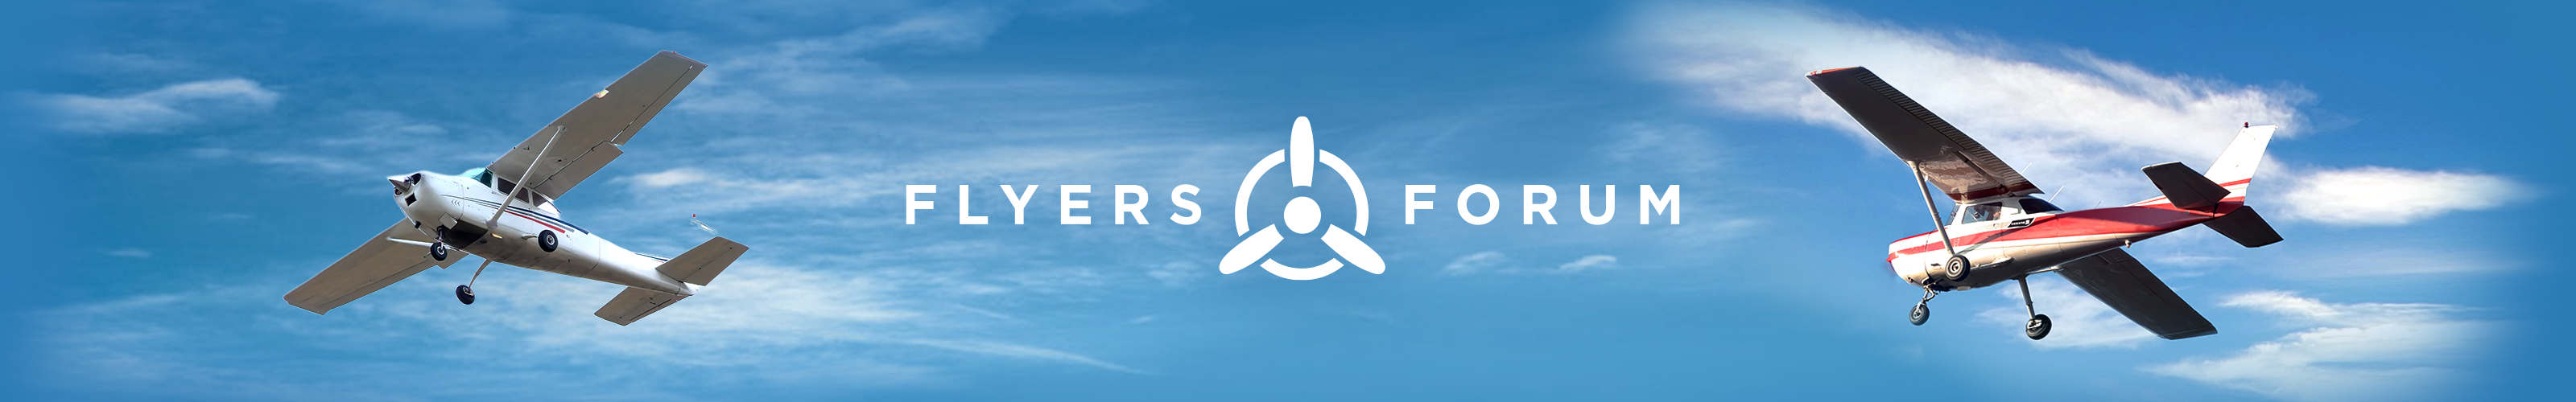 FlyersForum-Header2.jpg